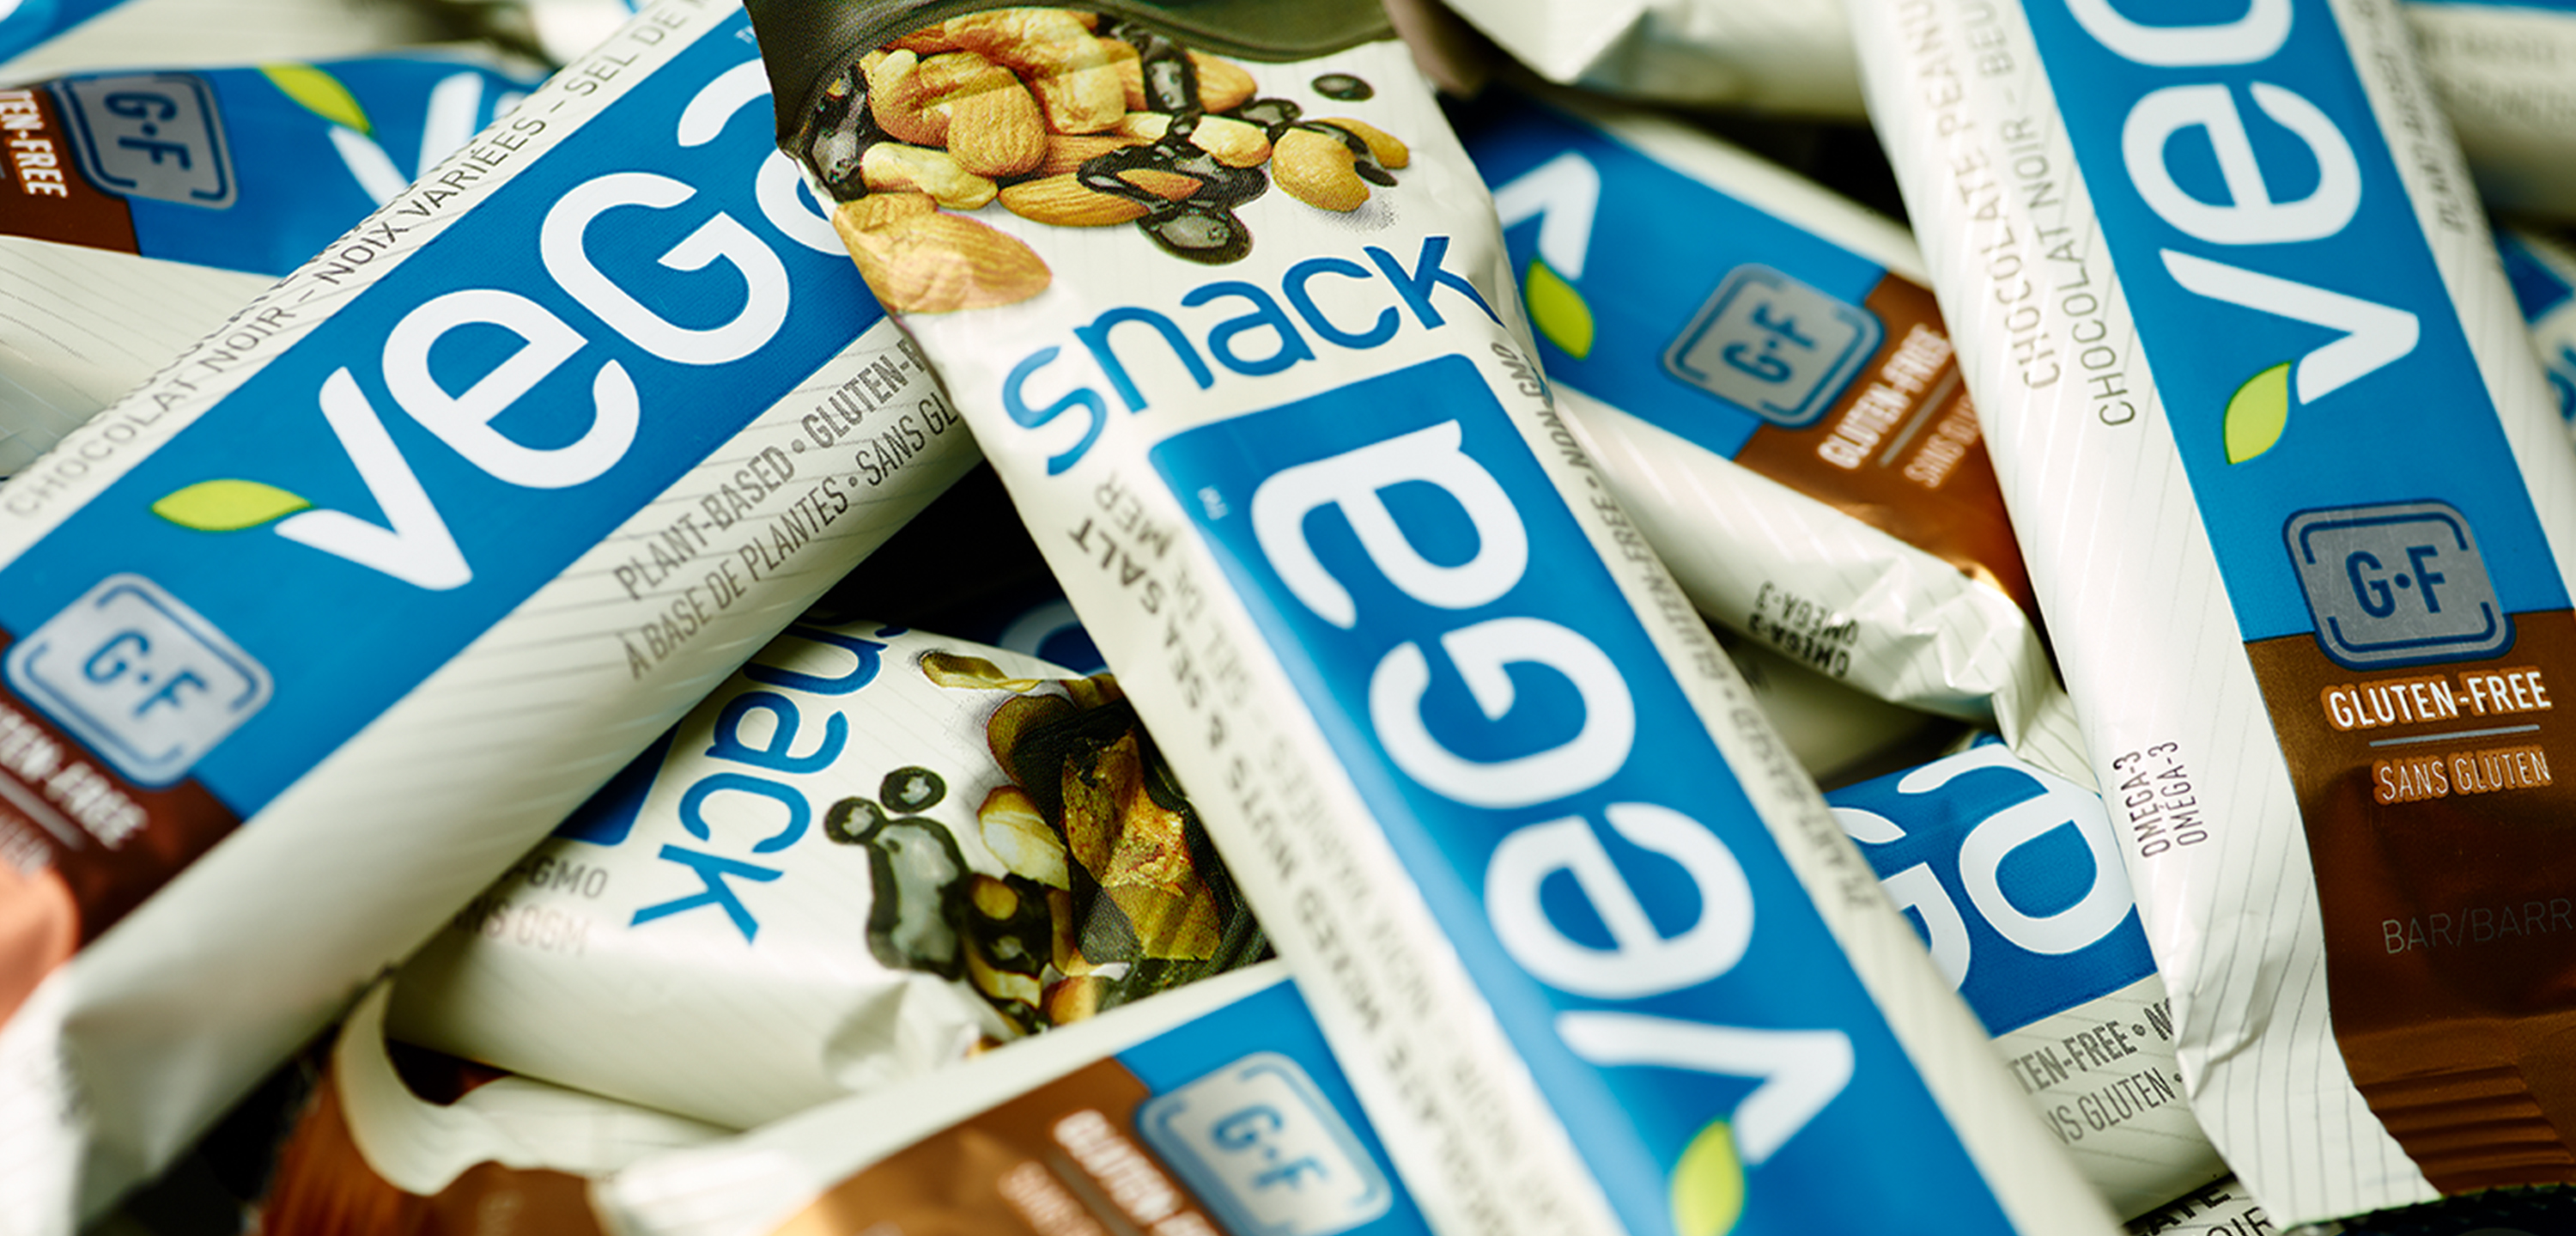 Vega Snack Bar Packaging | Dossier Creative | Plant-based success story